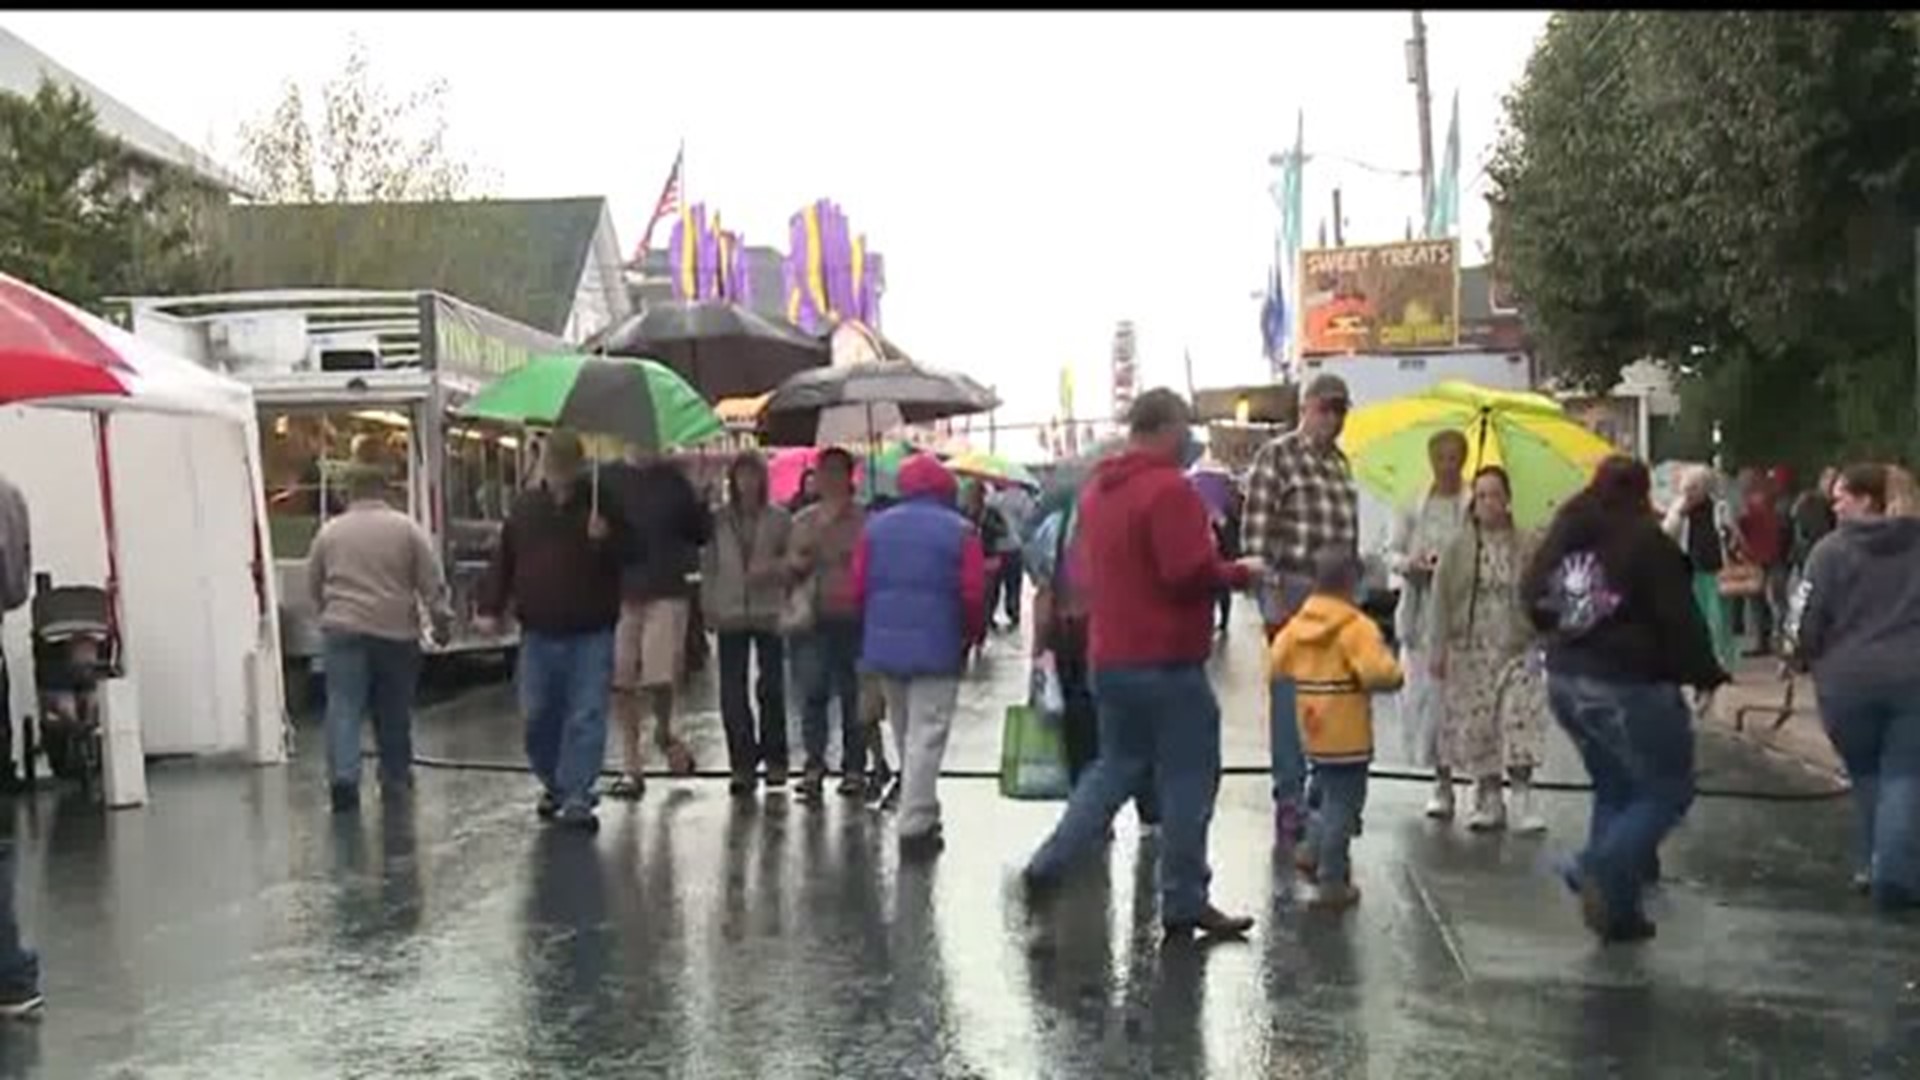 People attend New Holland Farmers Fair despite rain